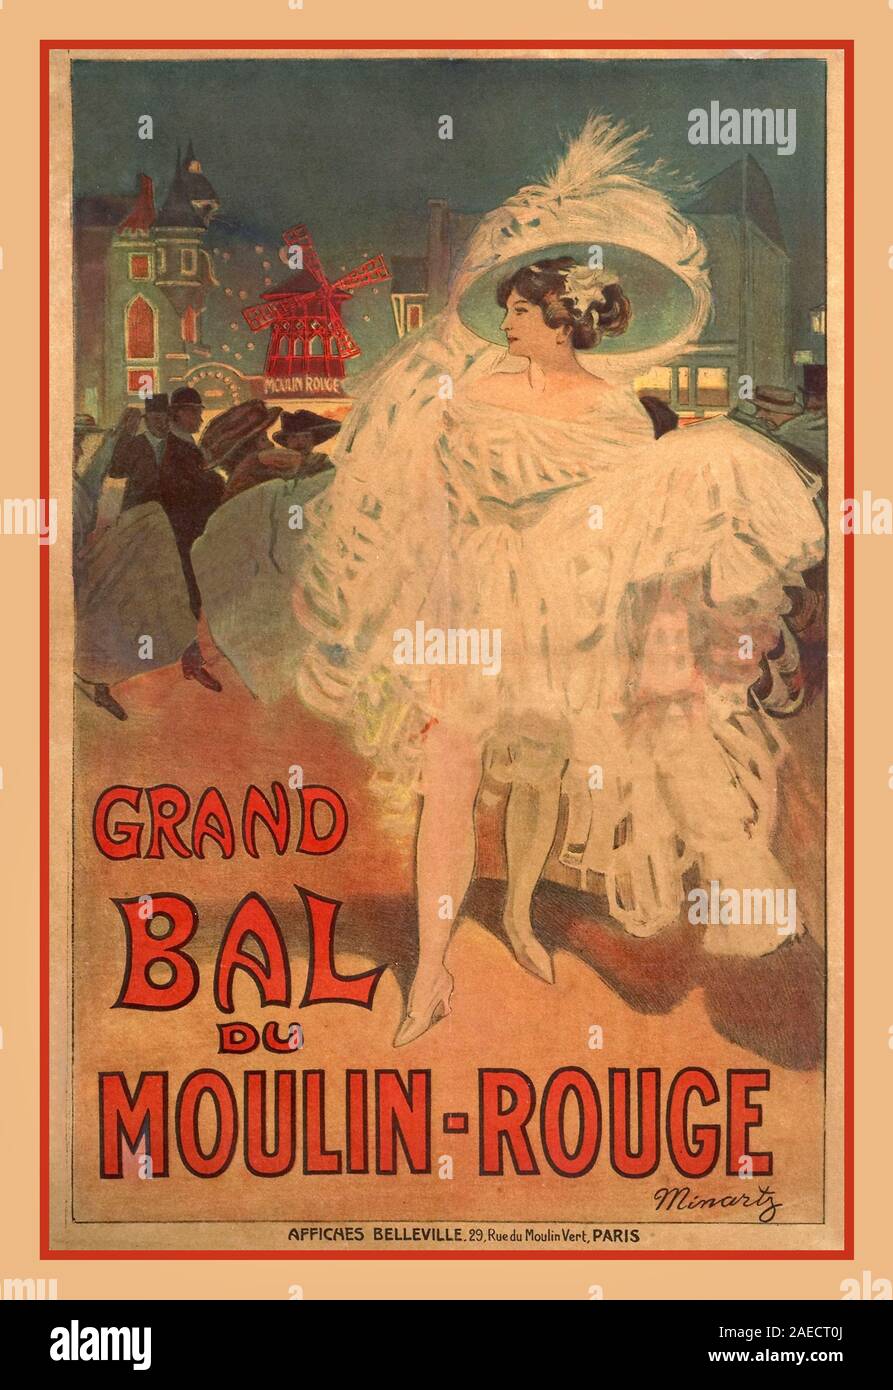 Wall Art Print, Bullier Theater 1899 Vintage Poster